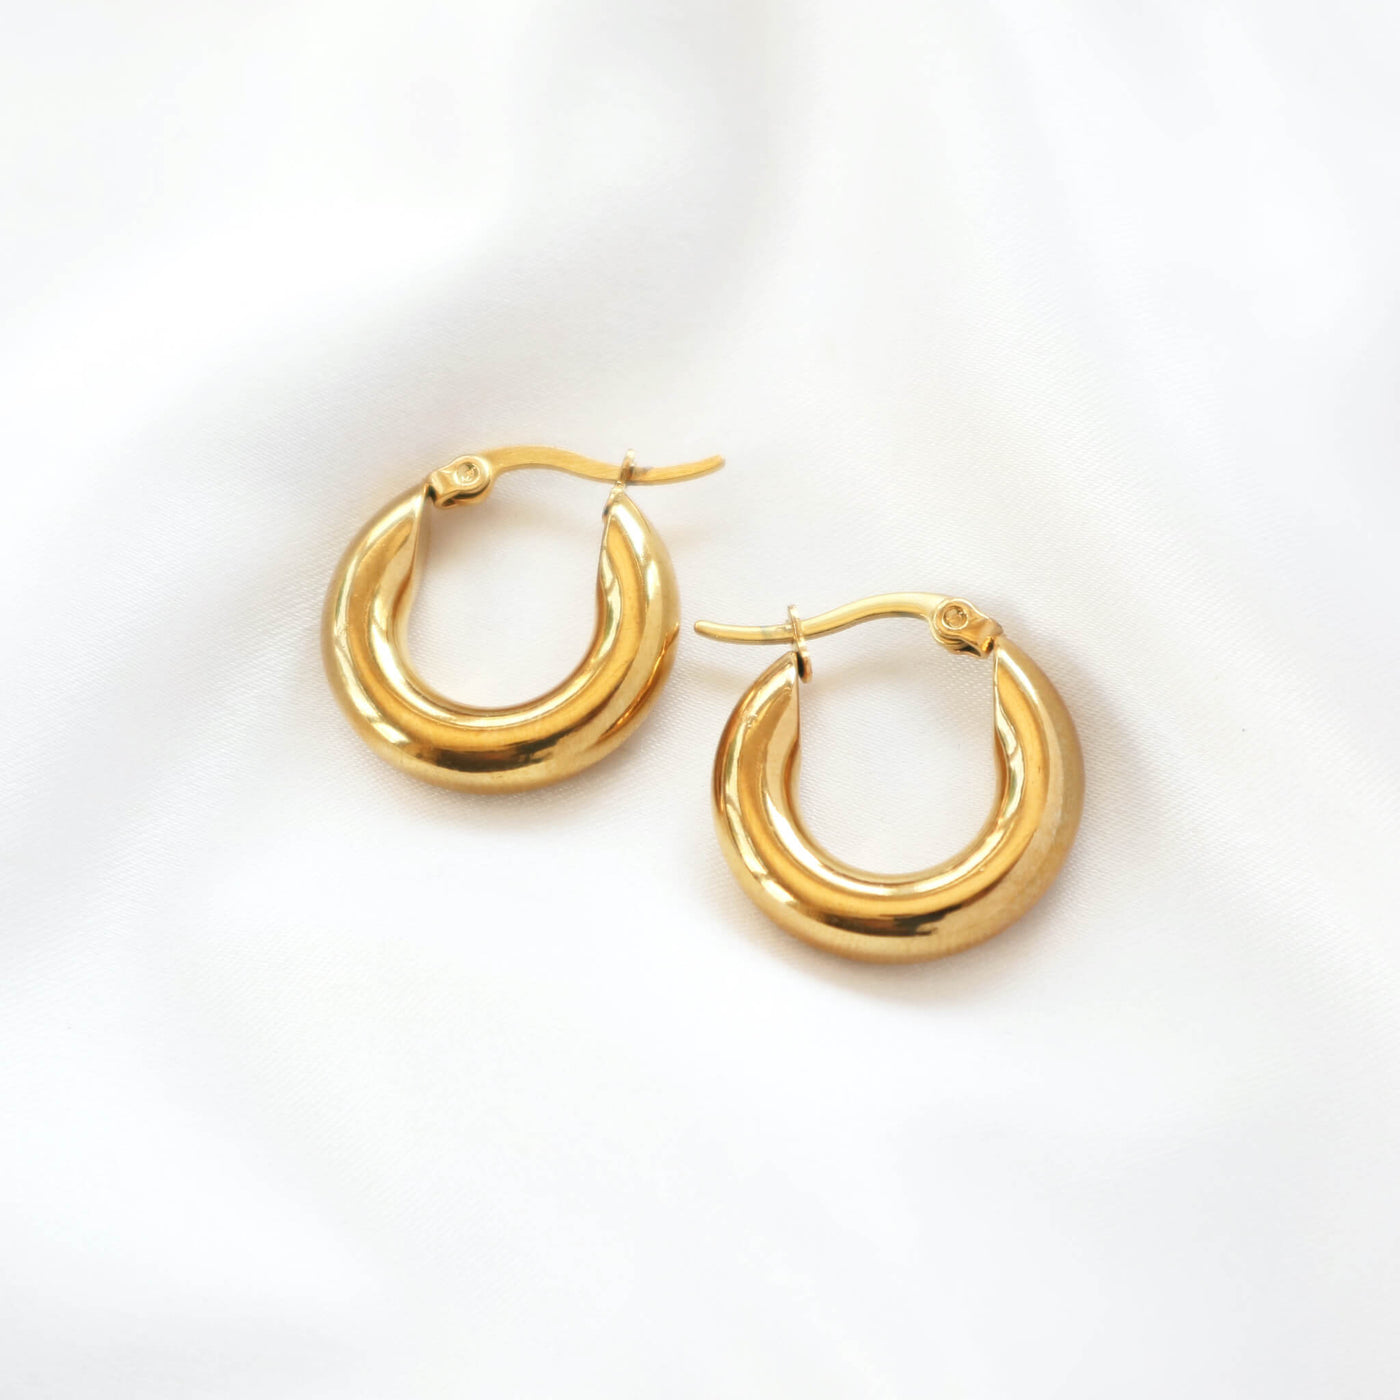 Small chunky gold hoop earrings, waterproof jewellery, Rani & Co.